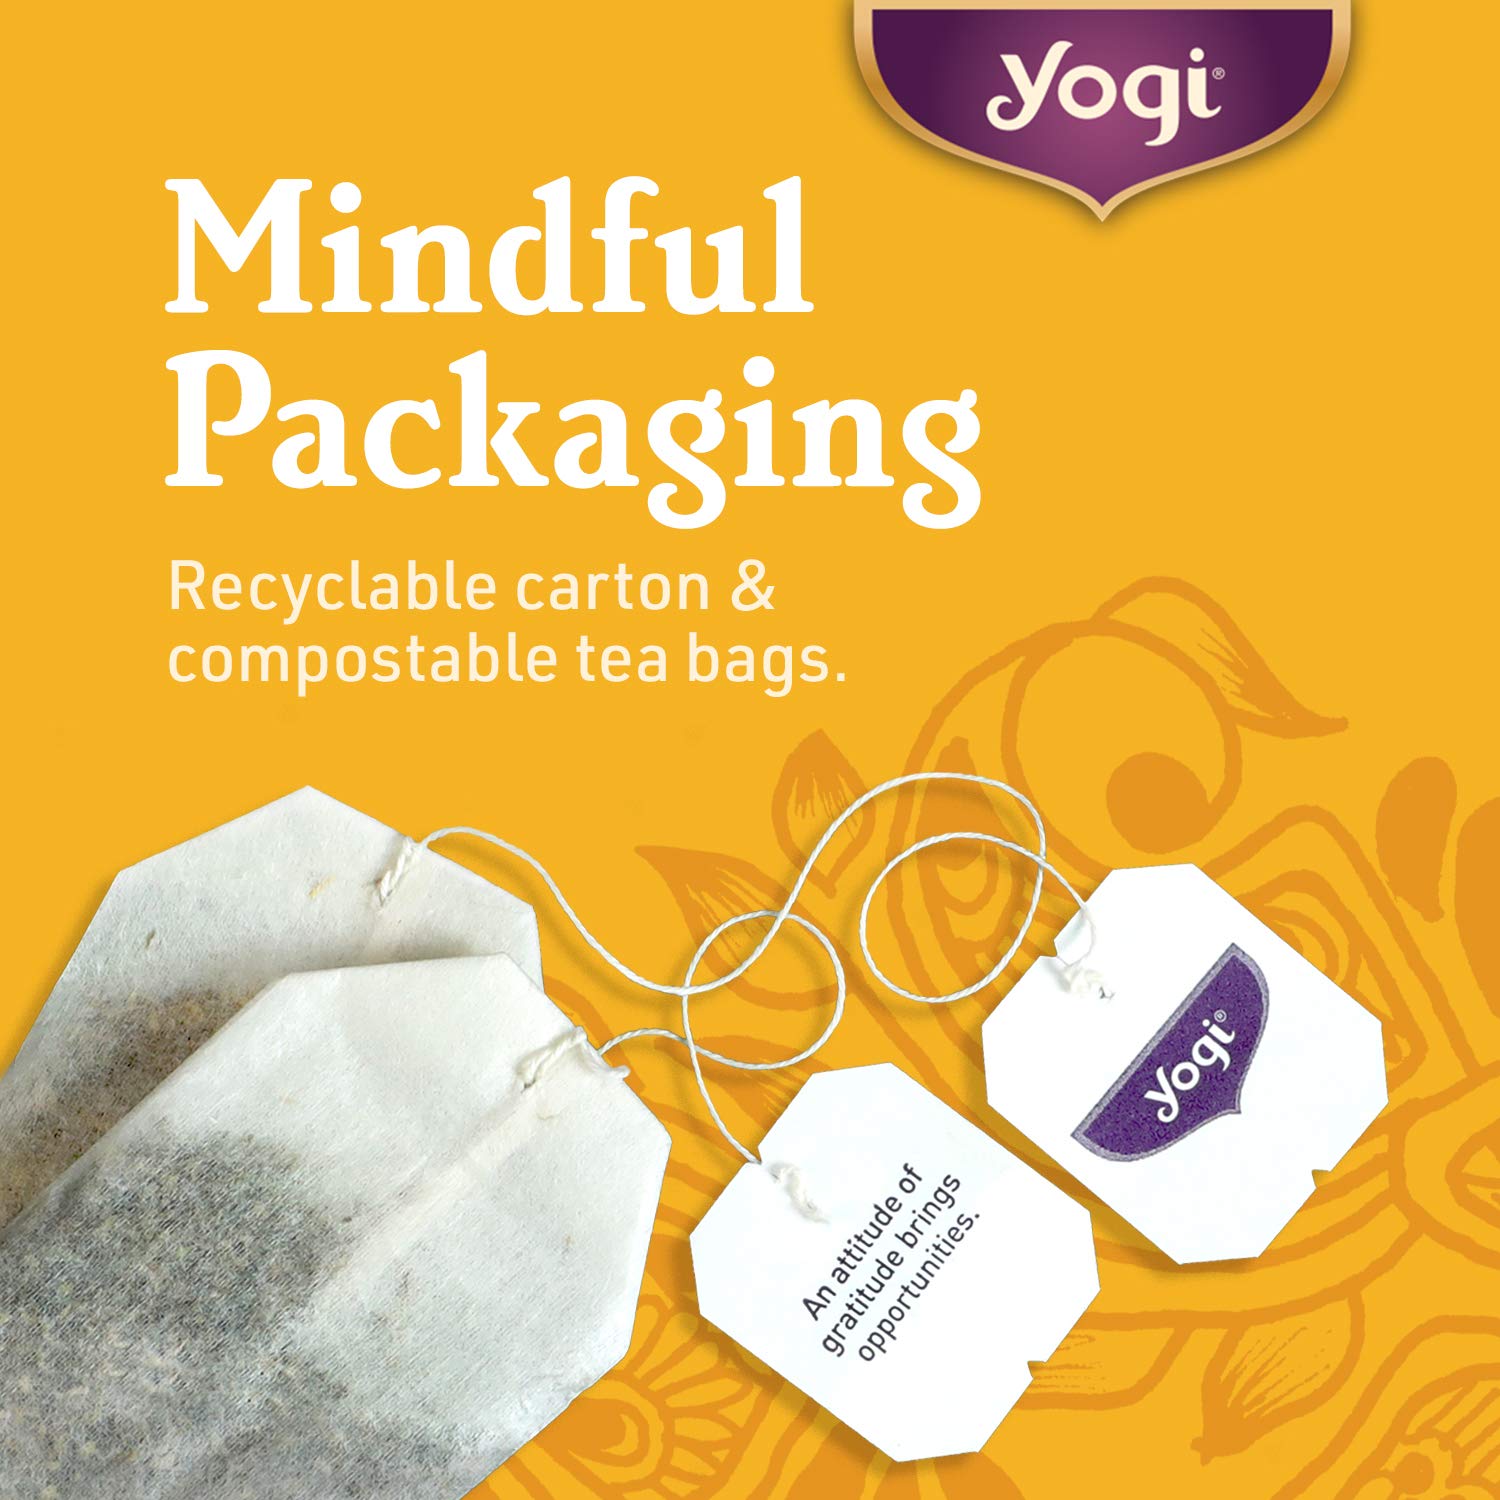 Yogi Tea DeTox Tea - 16 Tea Bags per Pack (4 Packs) - Organic Detox Tea for Digestive & Circulation Support - Includes Burdock, Dandelion, Ginger Root, Black Pepper, Cardamom & Juniper Berry